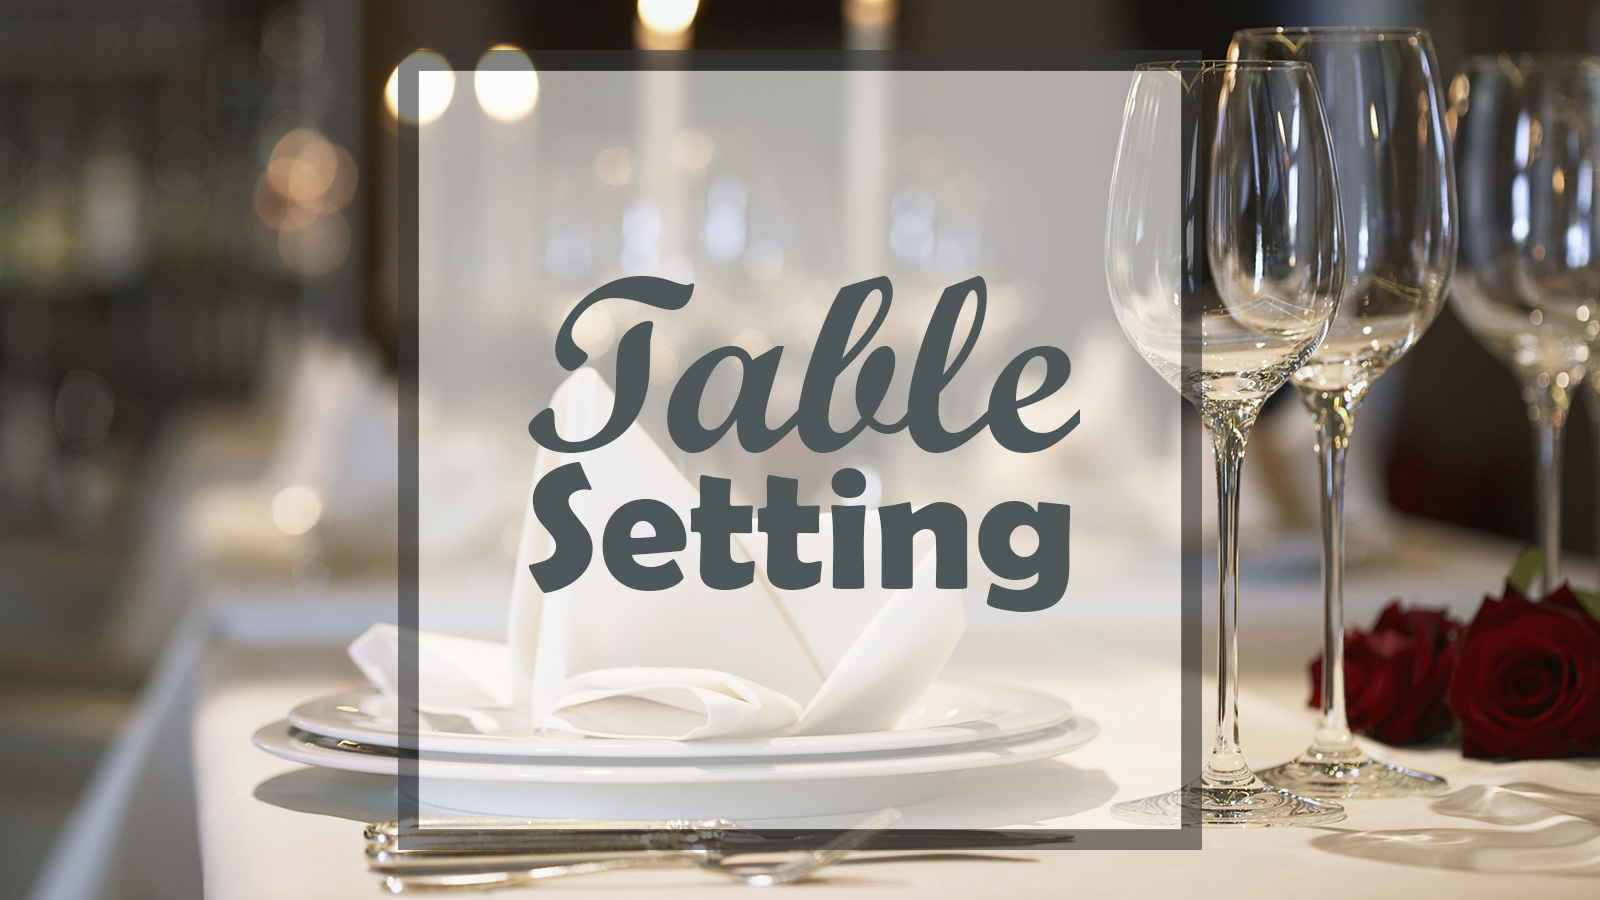 https://www.etiquettescholar.com/images/dining_etiquette/table_setting/thumbnail-table-setting-16x9.jpg